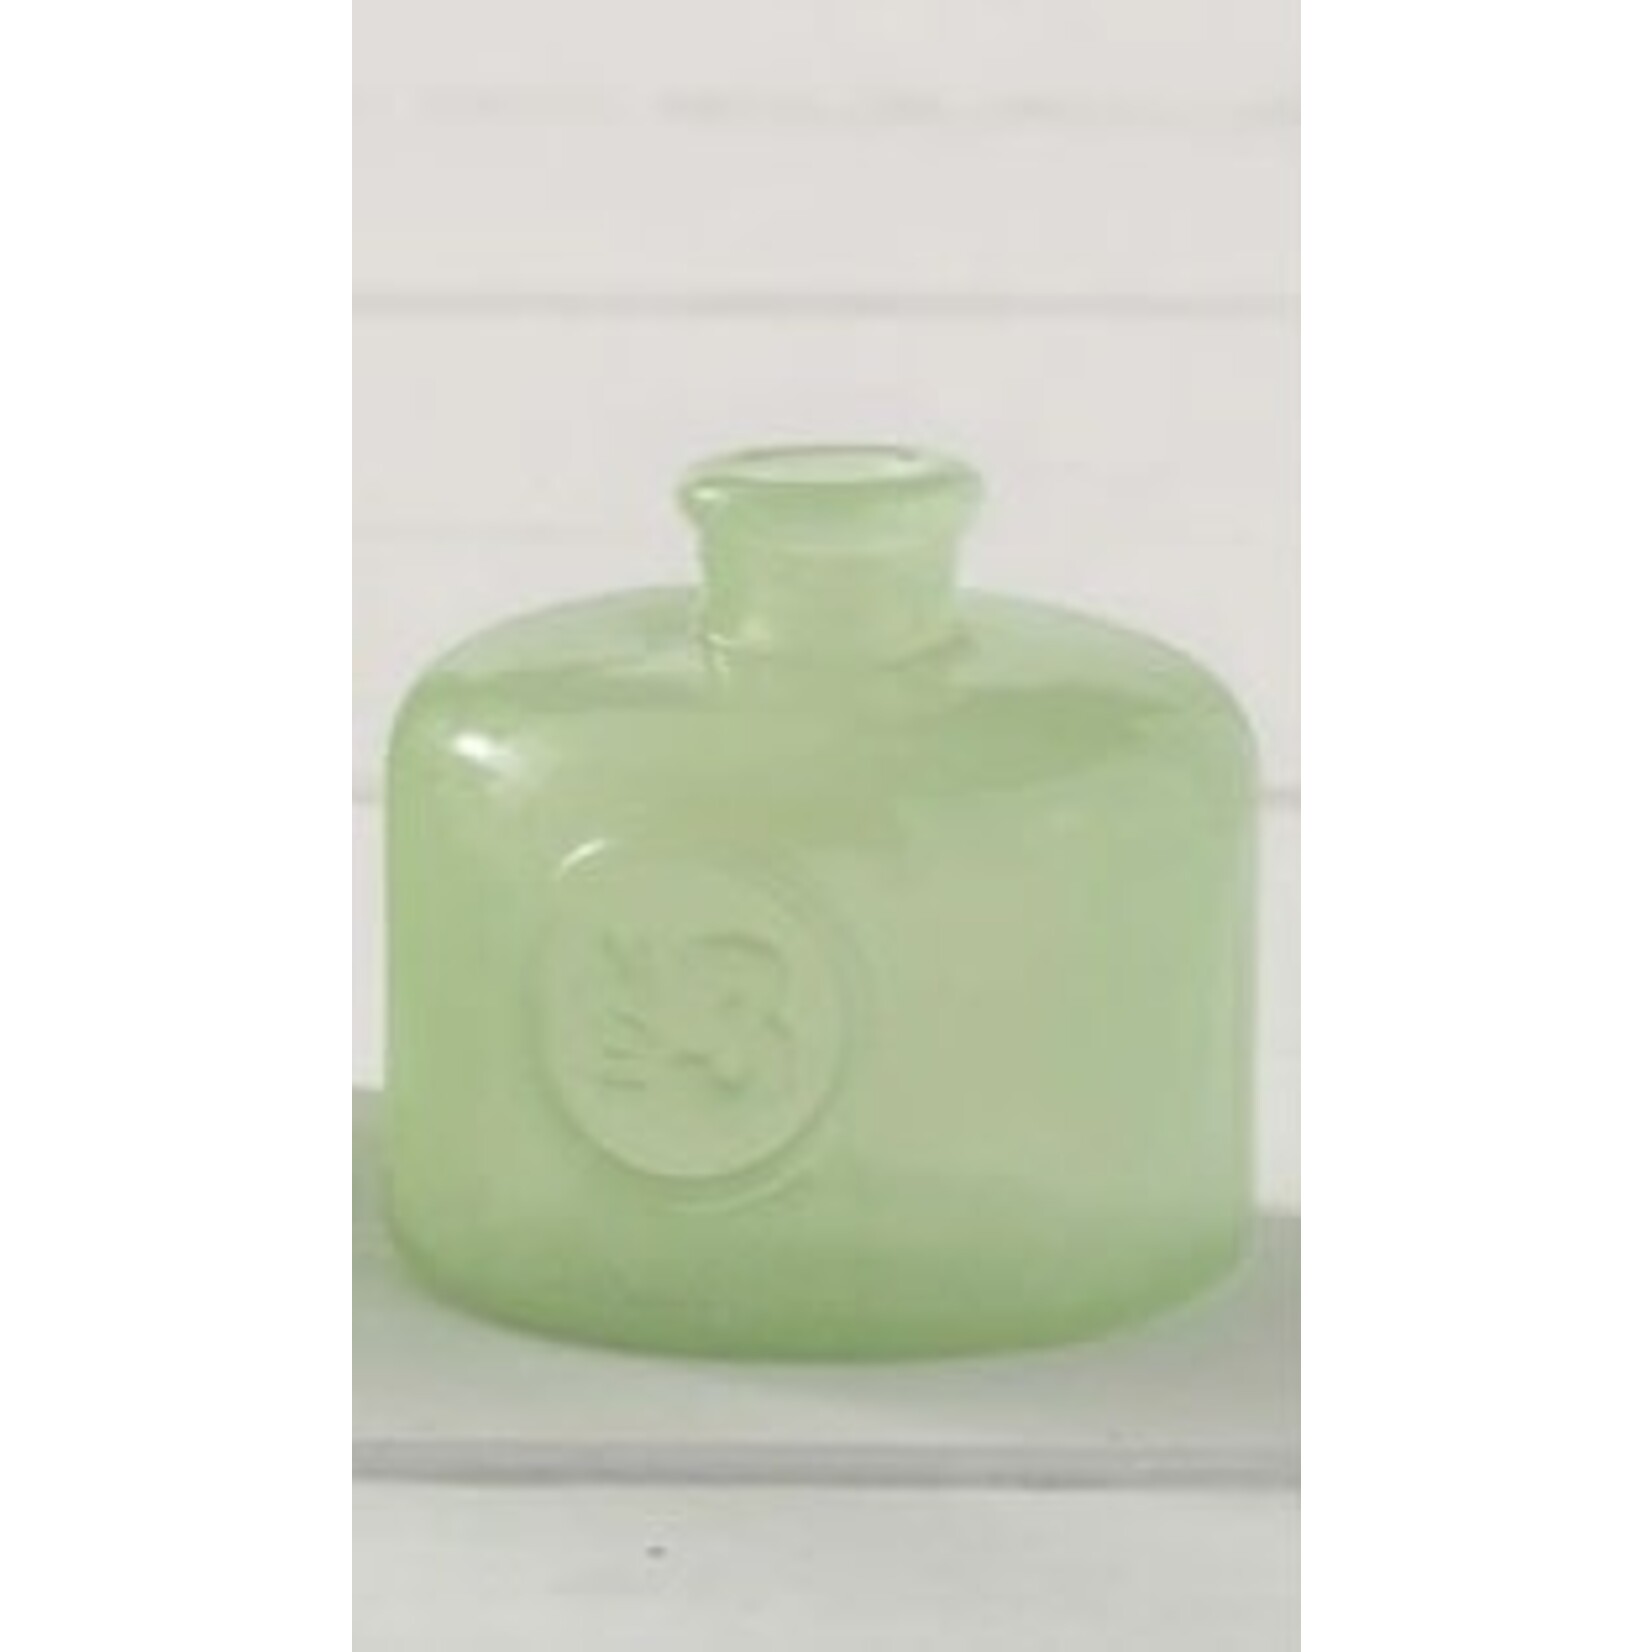 J.C. Rollie J.C. & Rollie Green Milk Glass Vase